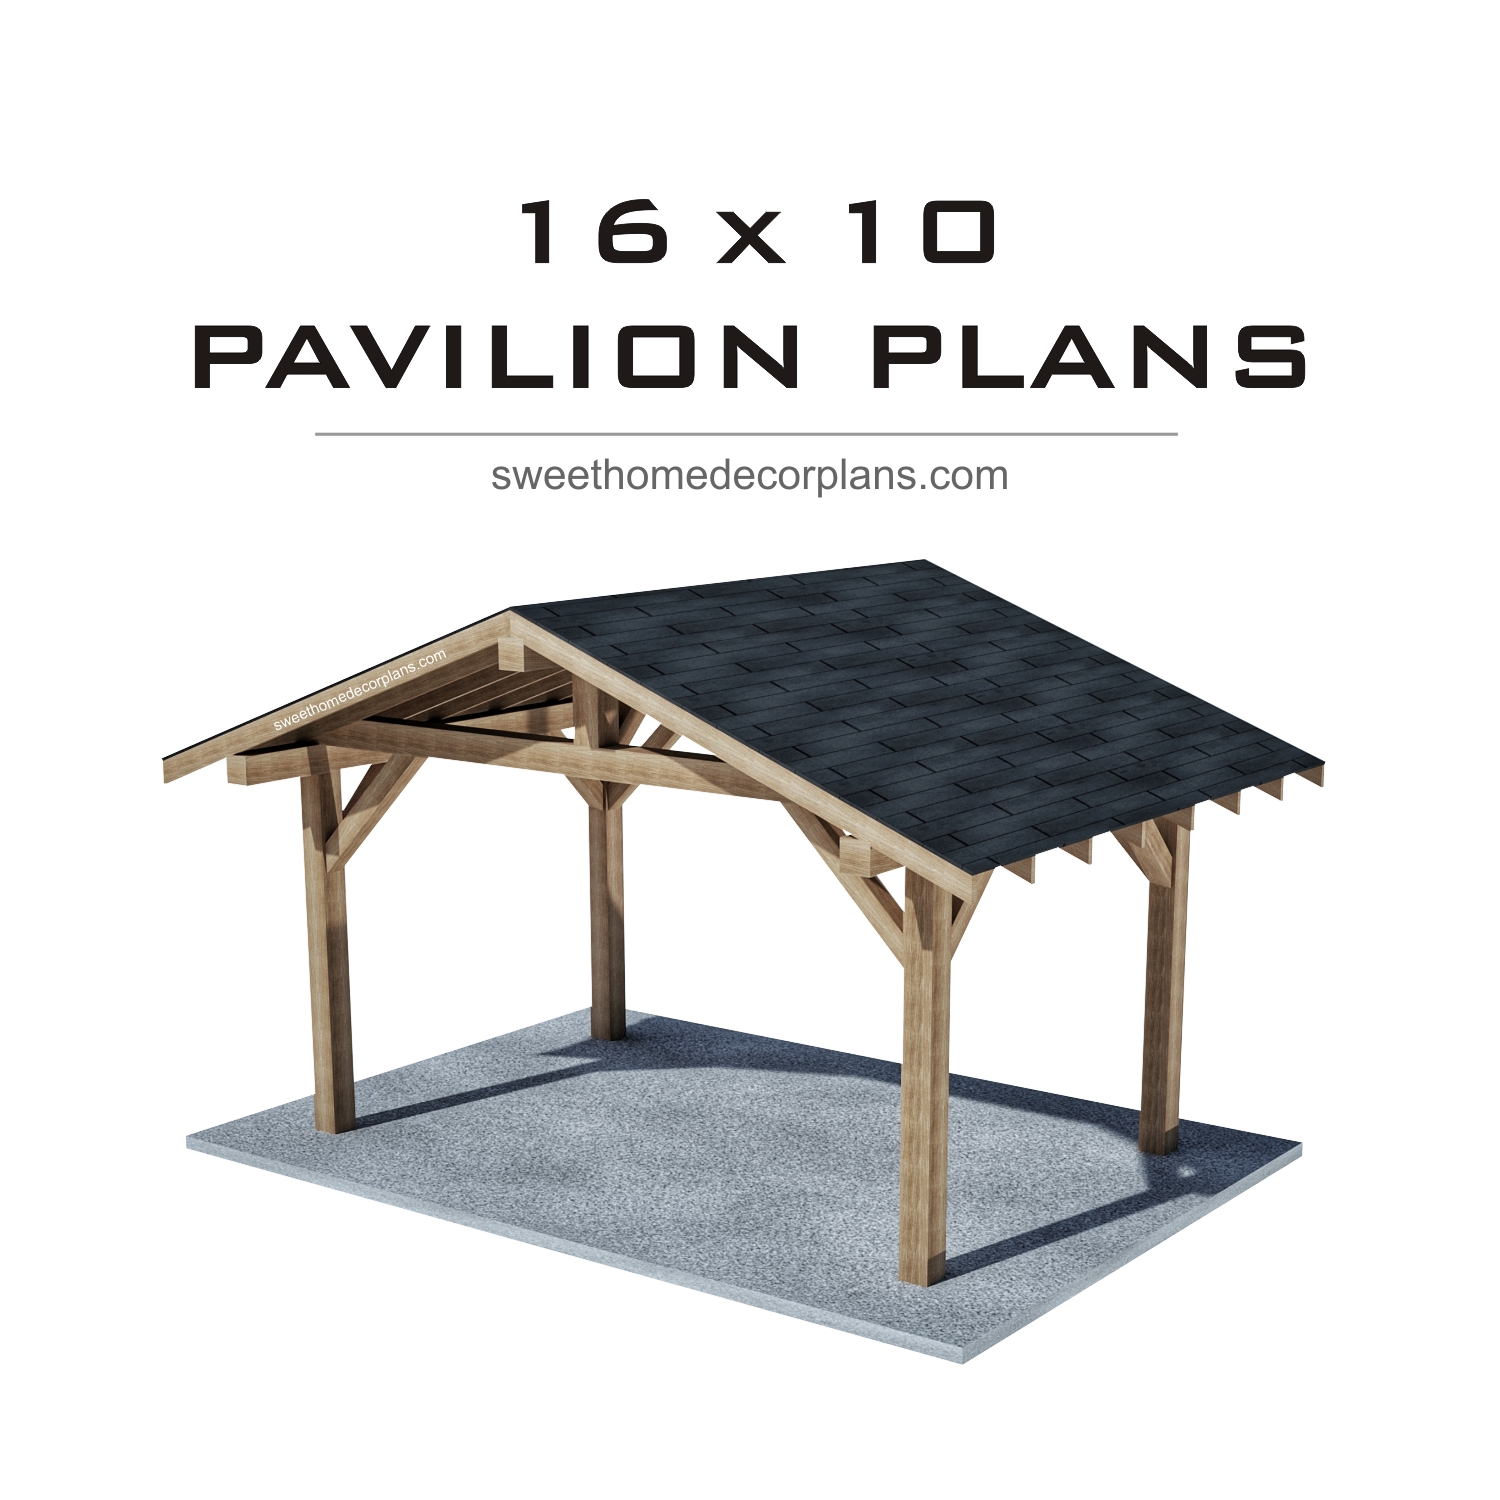 Diy-16-х-10-gable-pavilion-plans-carport-patio-gazebo